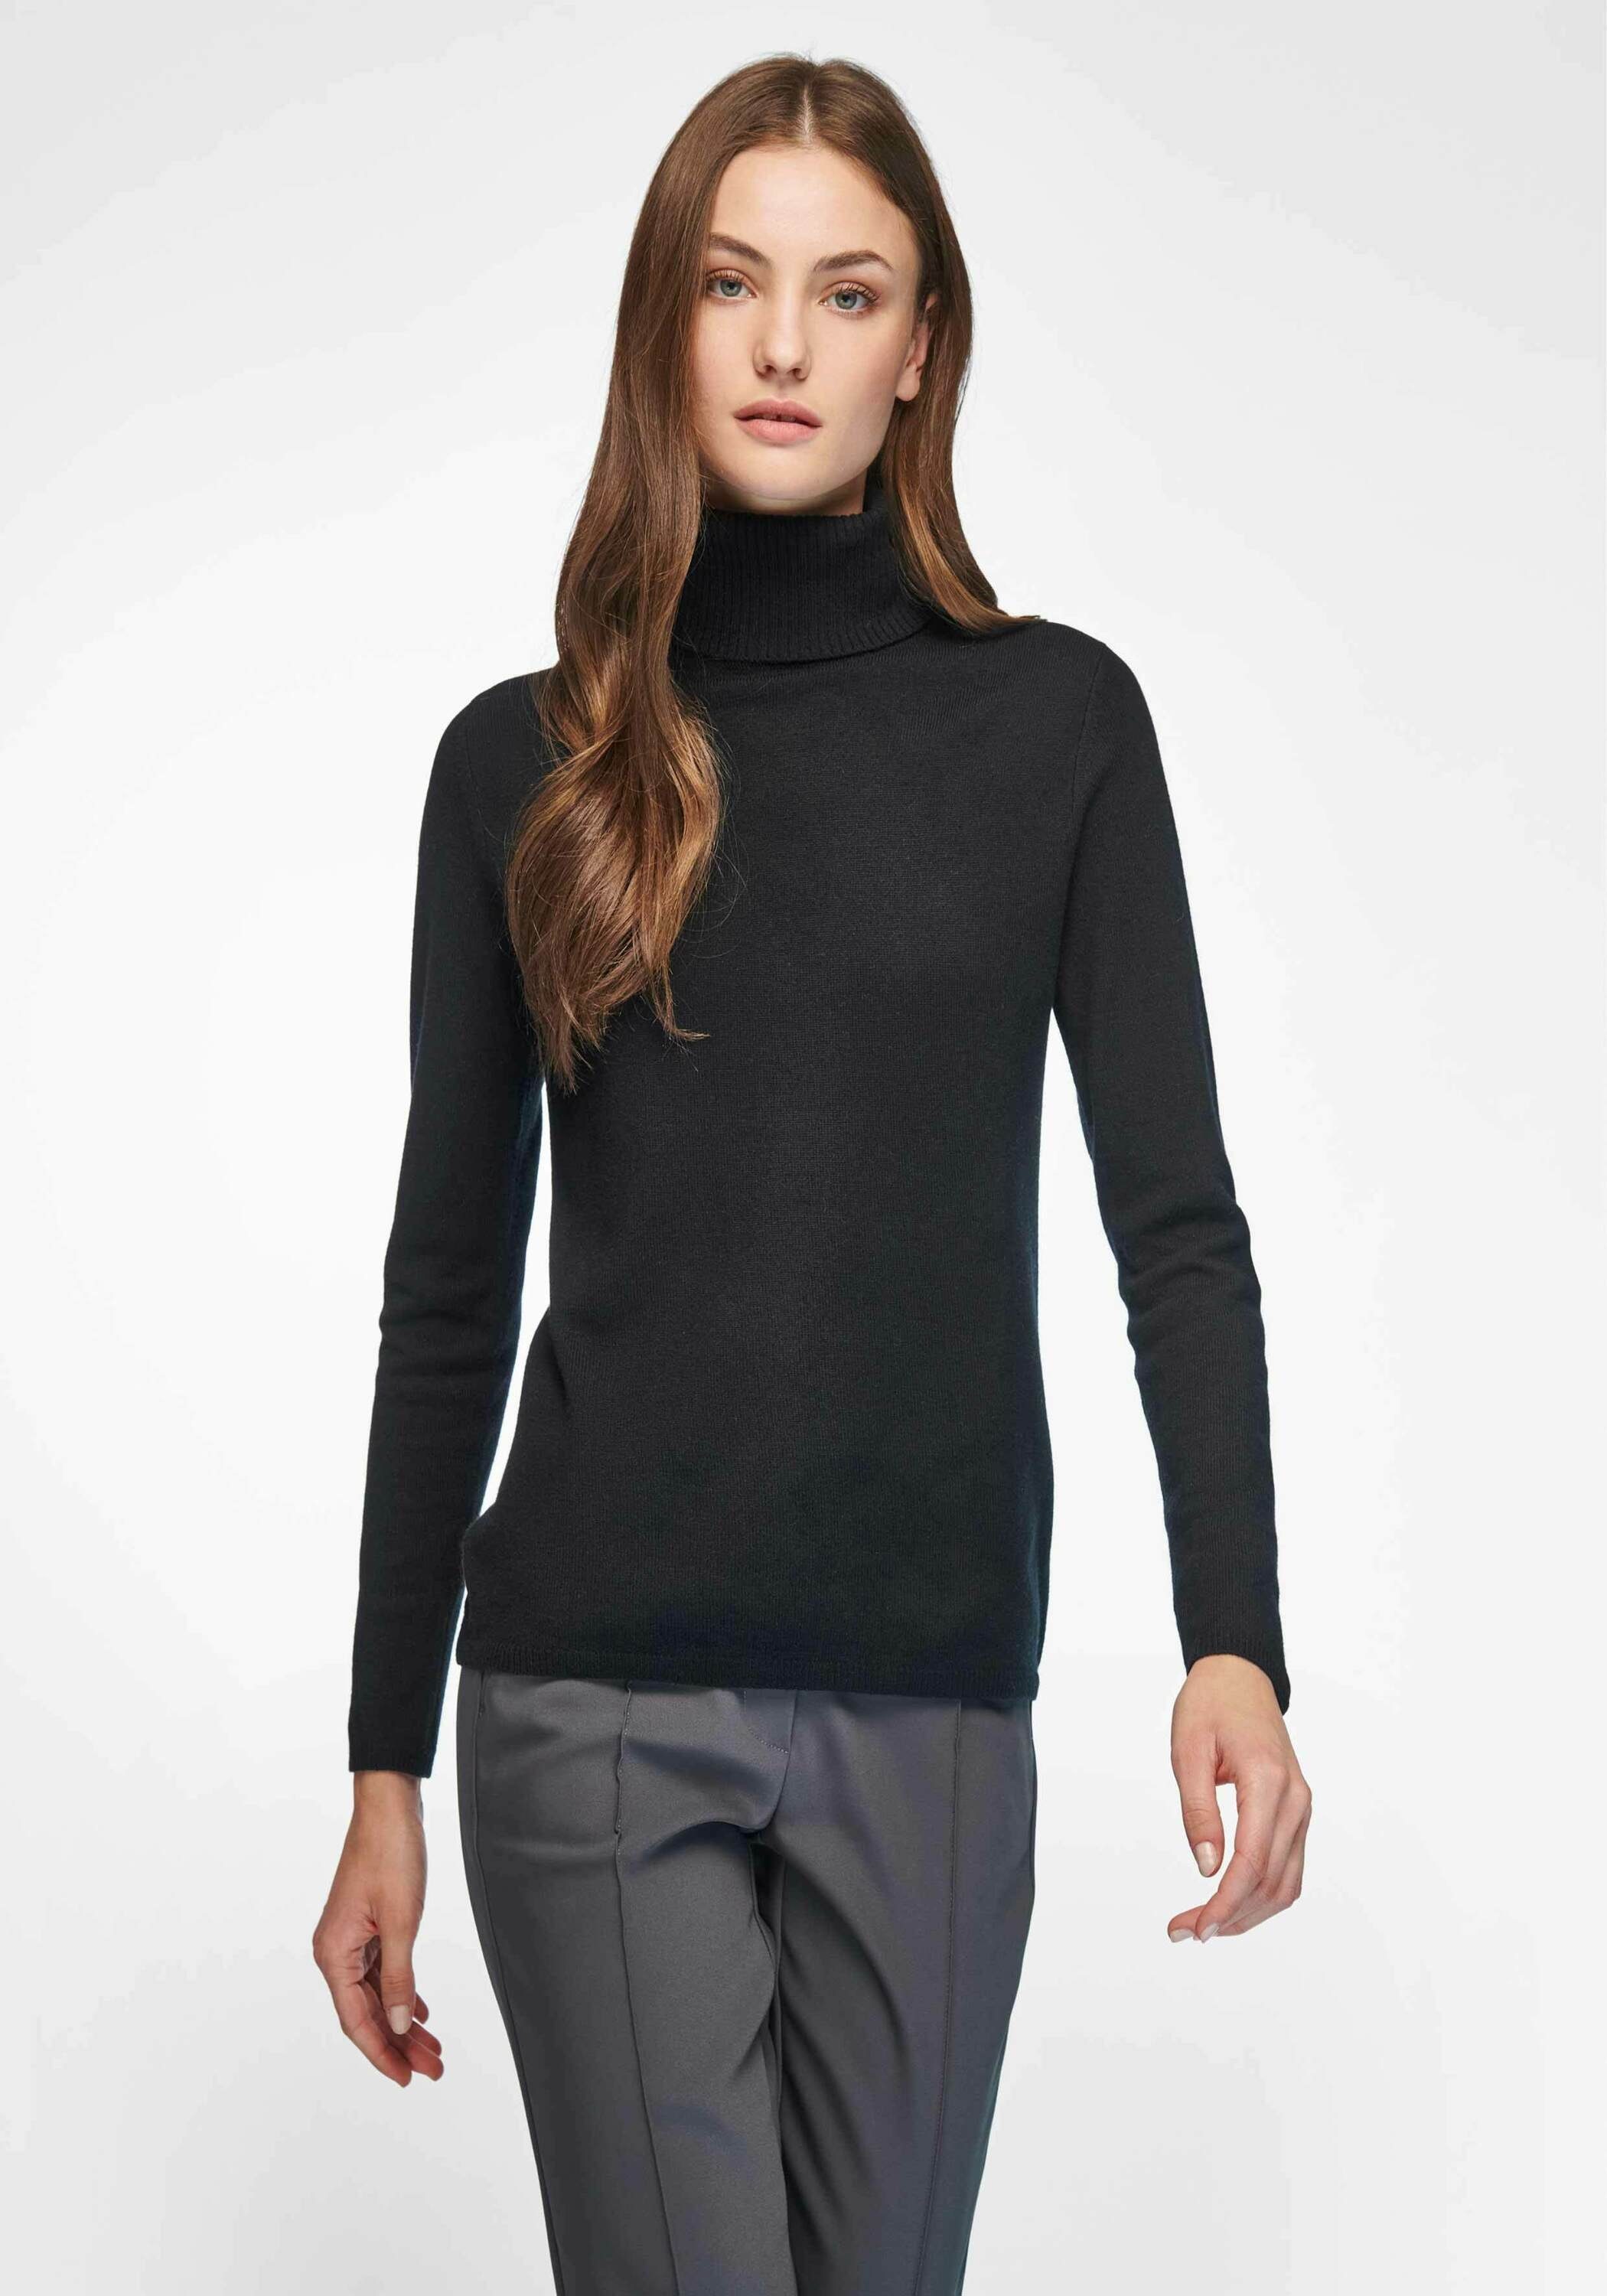 Sweatshirt schwarz . new wool include